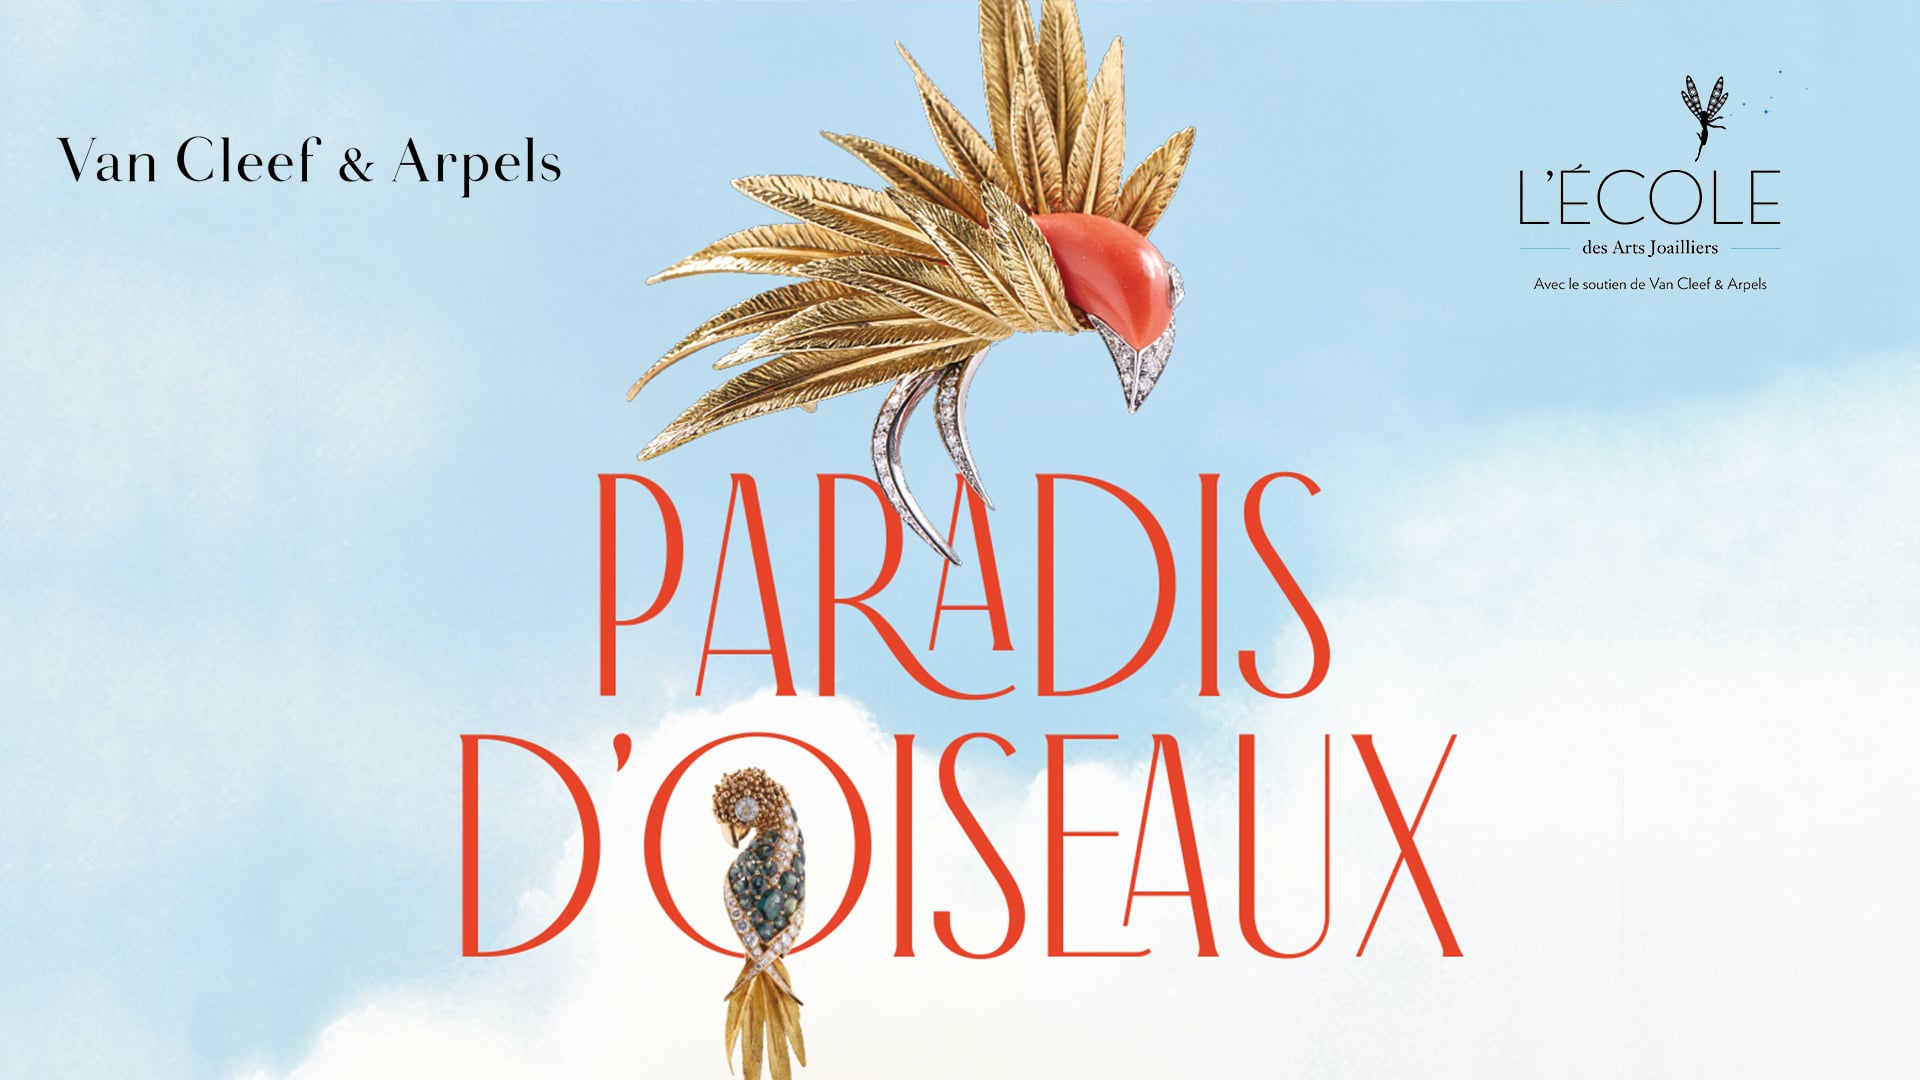 Van Cleef & Arpels - Birds in Paradise-2